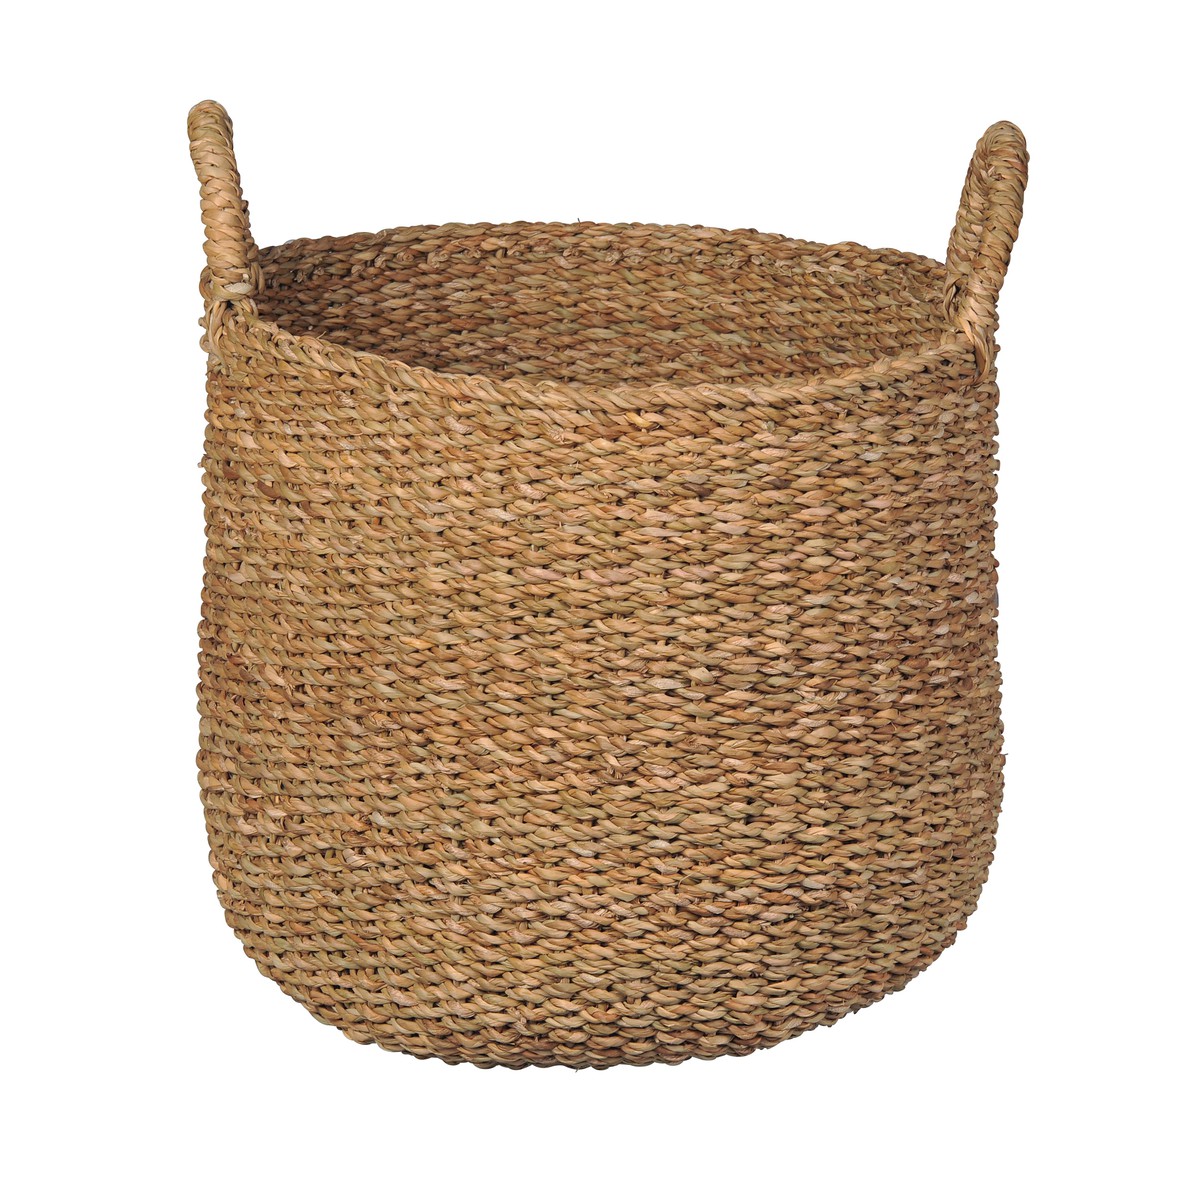   Basket Fang 35x32cm Natural  